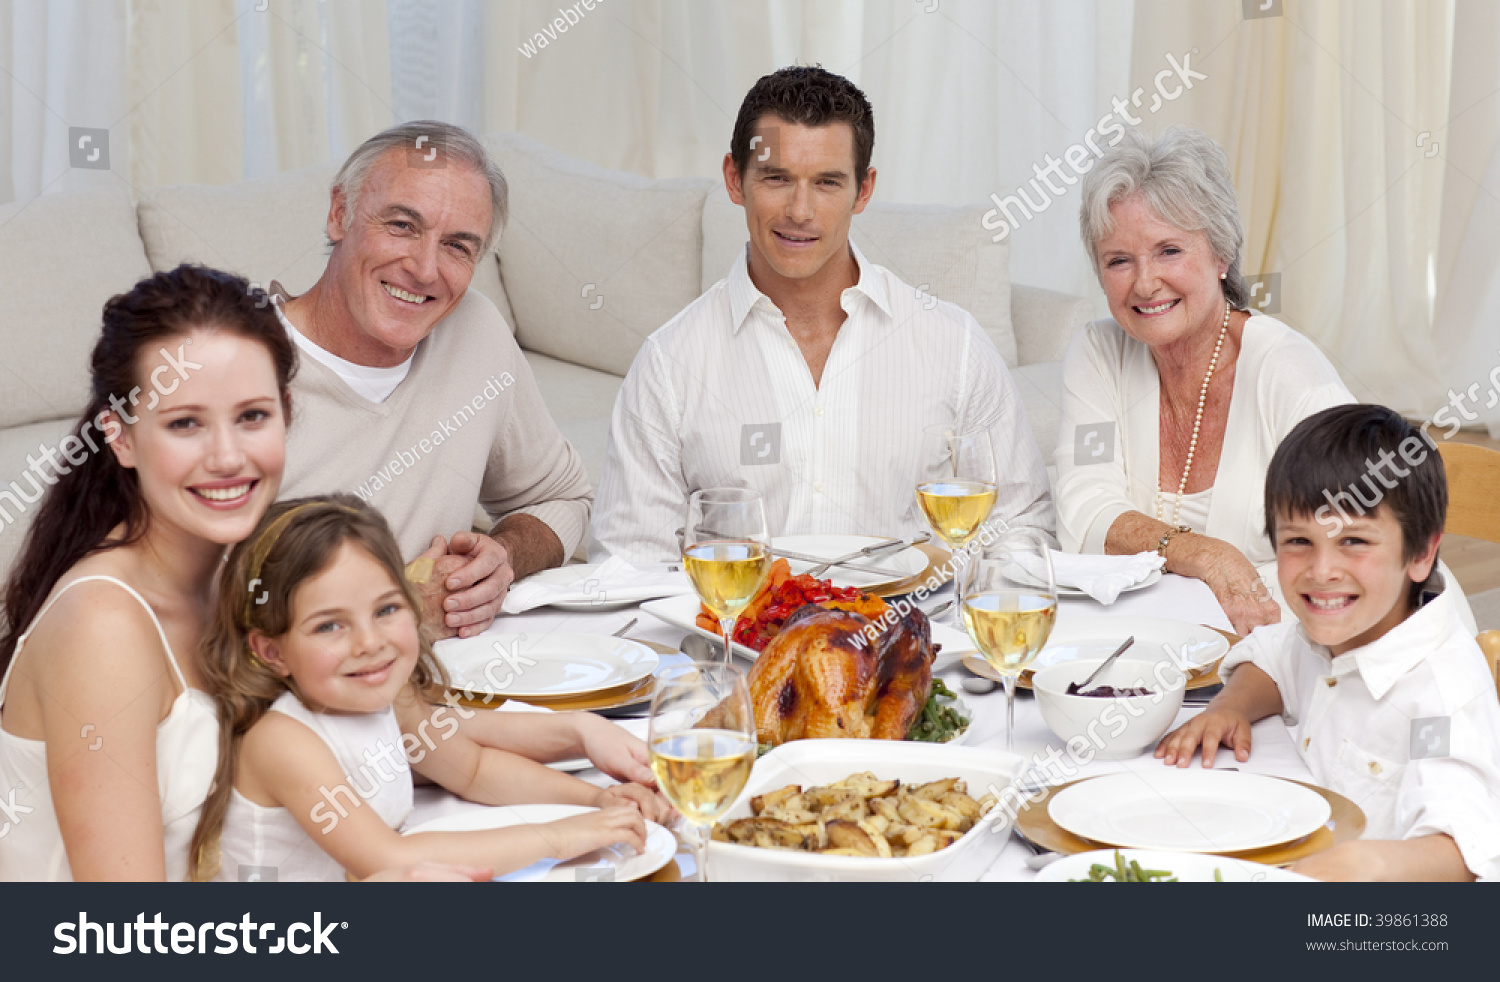 Family Having Big Dinner Together Home Stock Photo 39861388 - Shutterstock